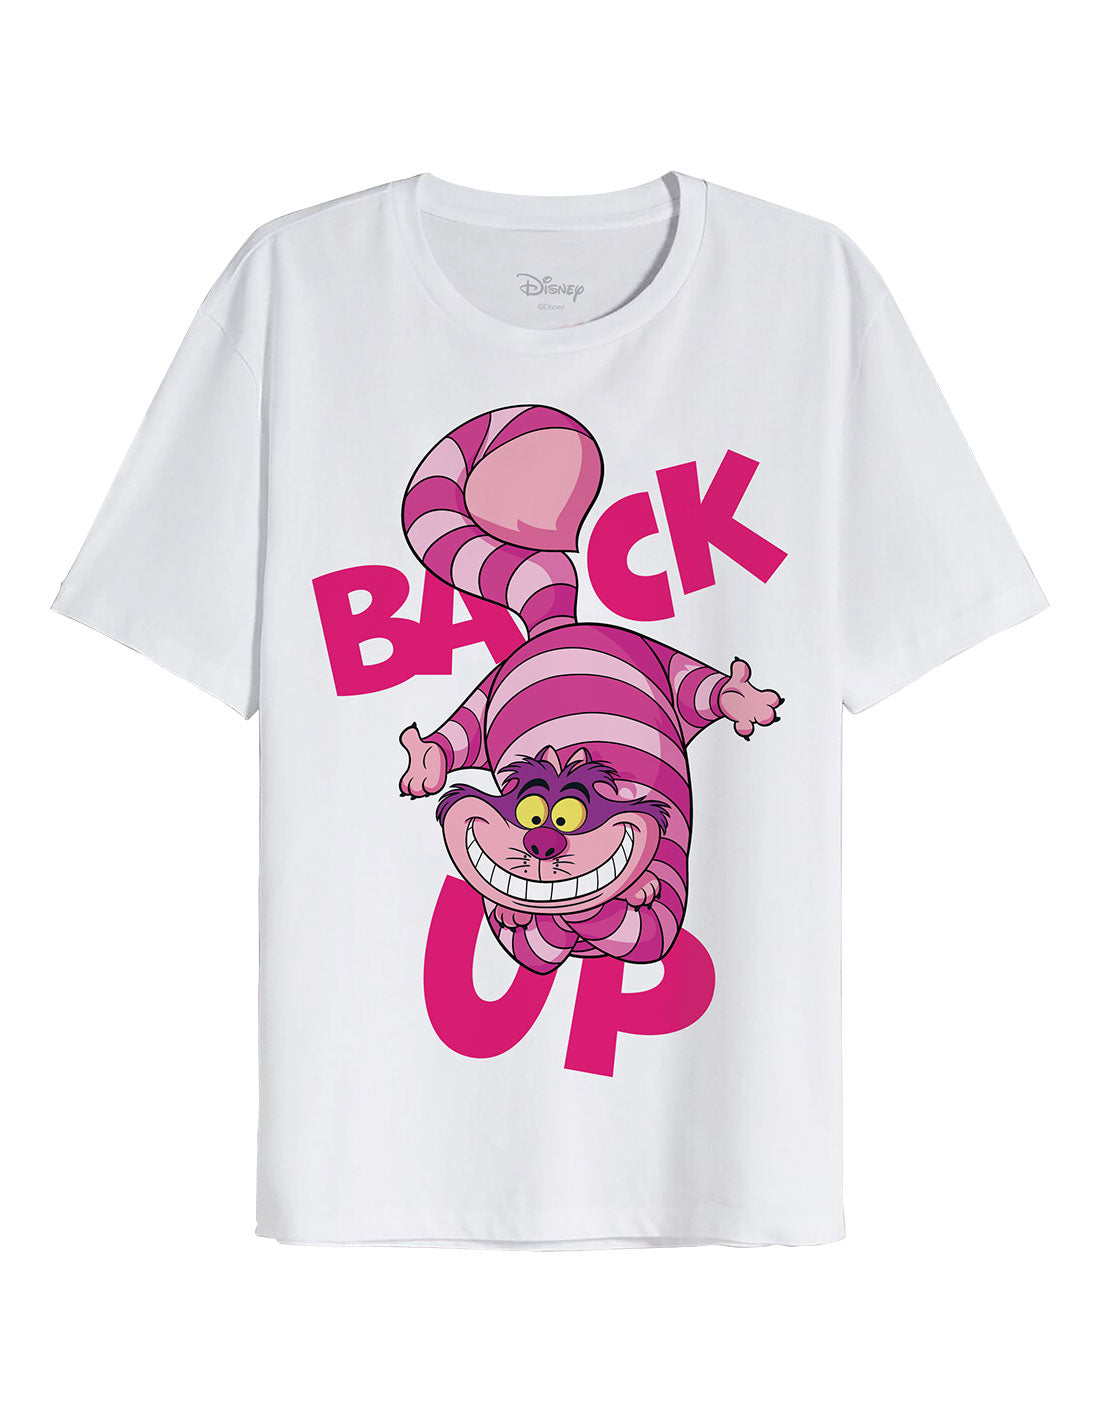 Disney Women's Oversize T-shirt - Back Up